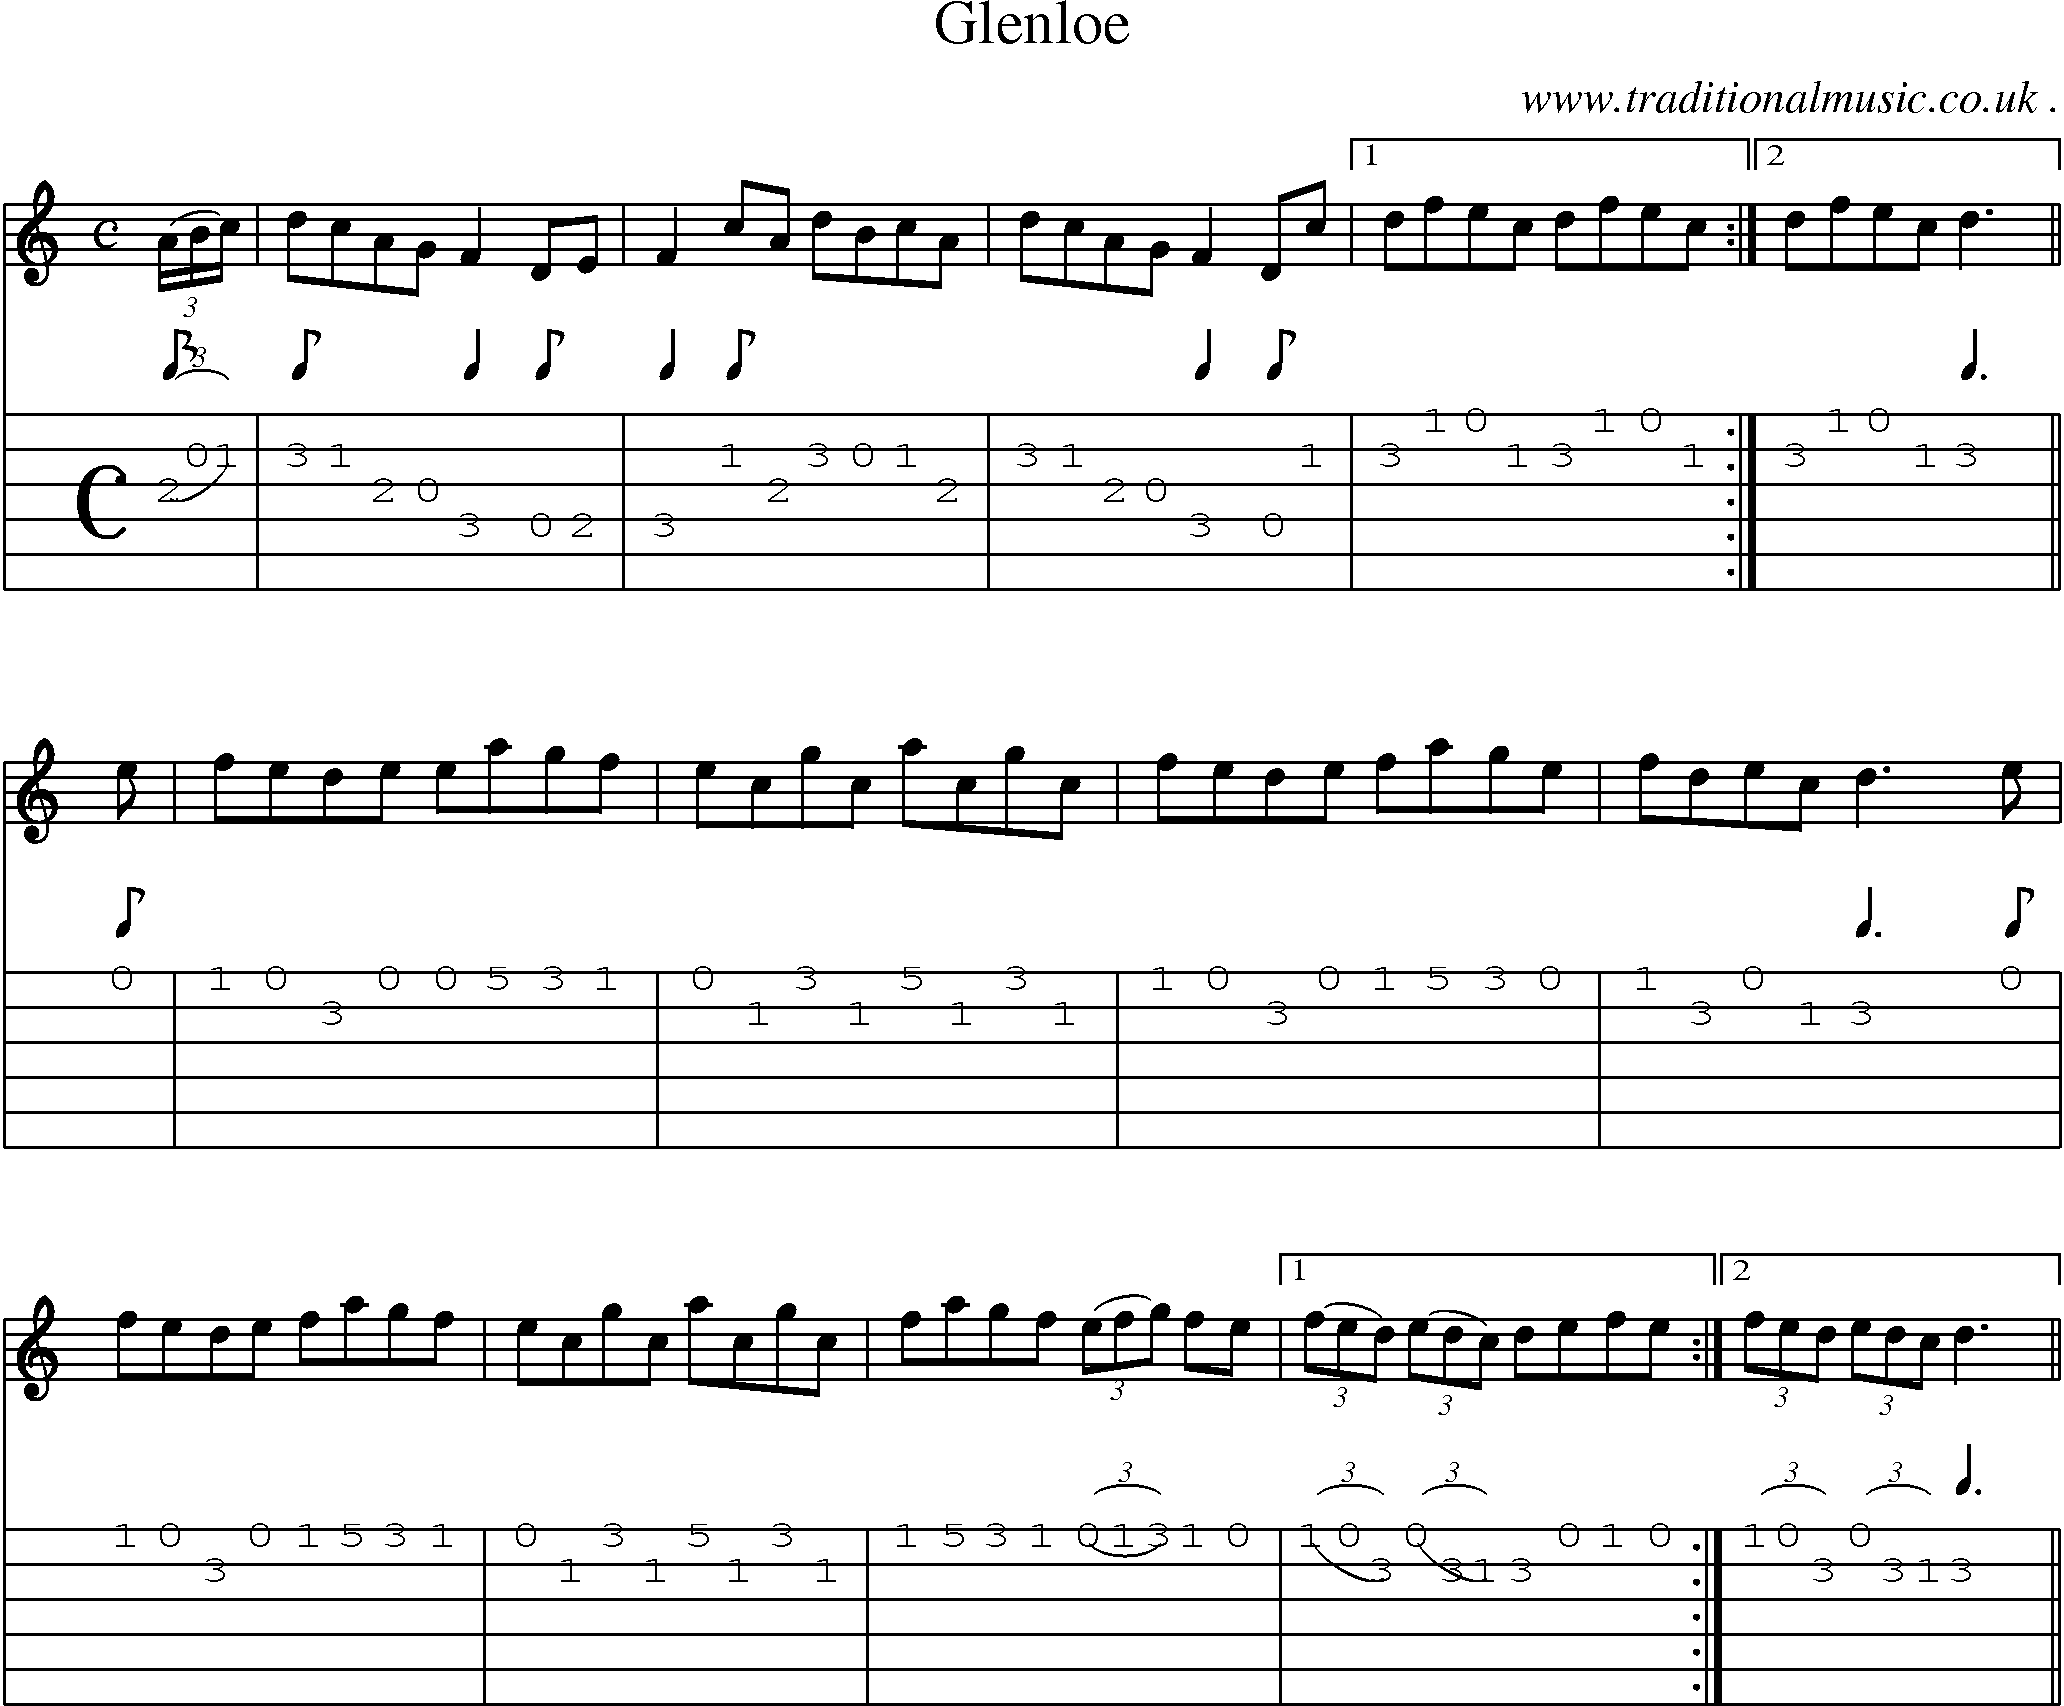 Sheet-Music and Guitar Tabs for Glenloe